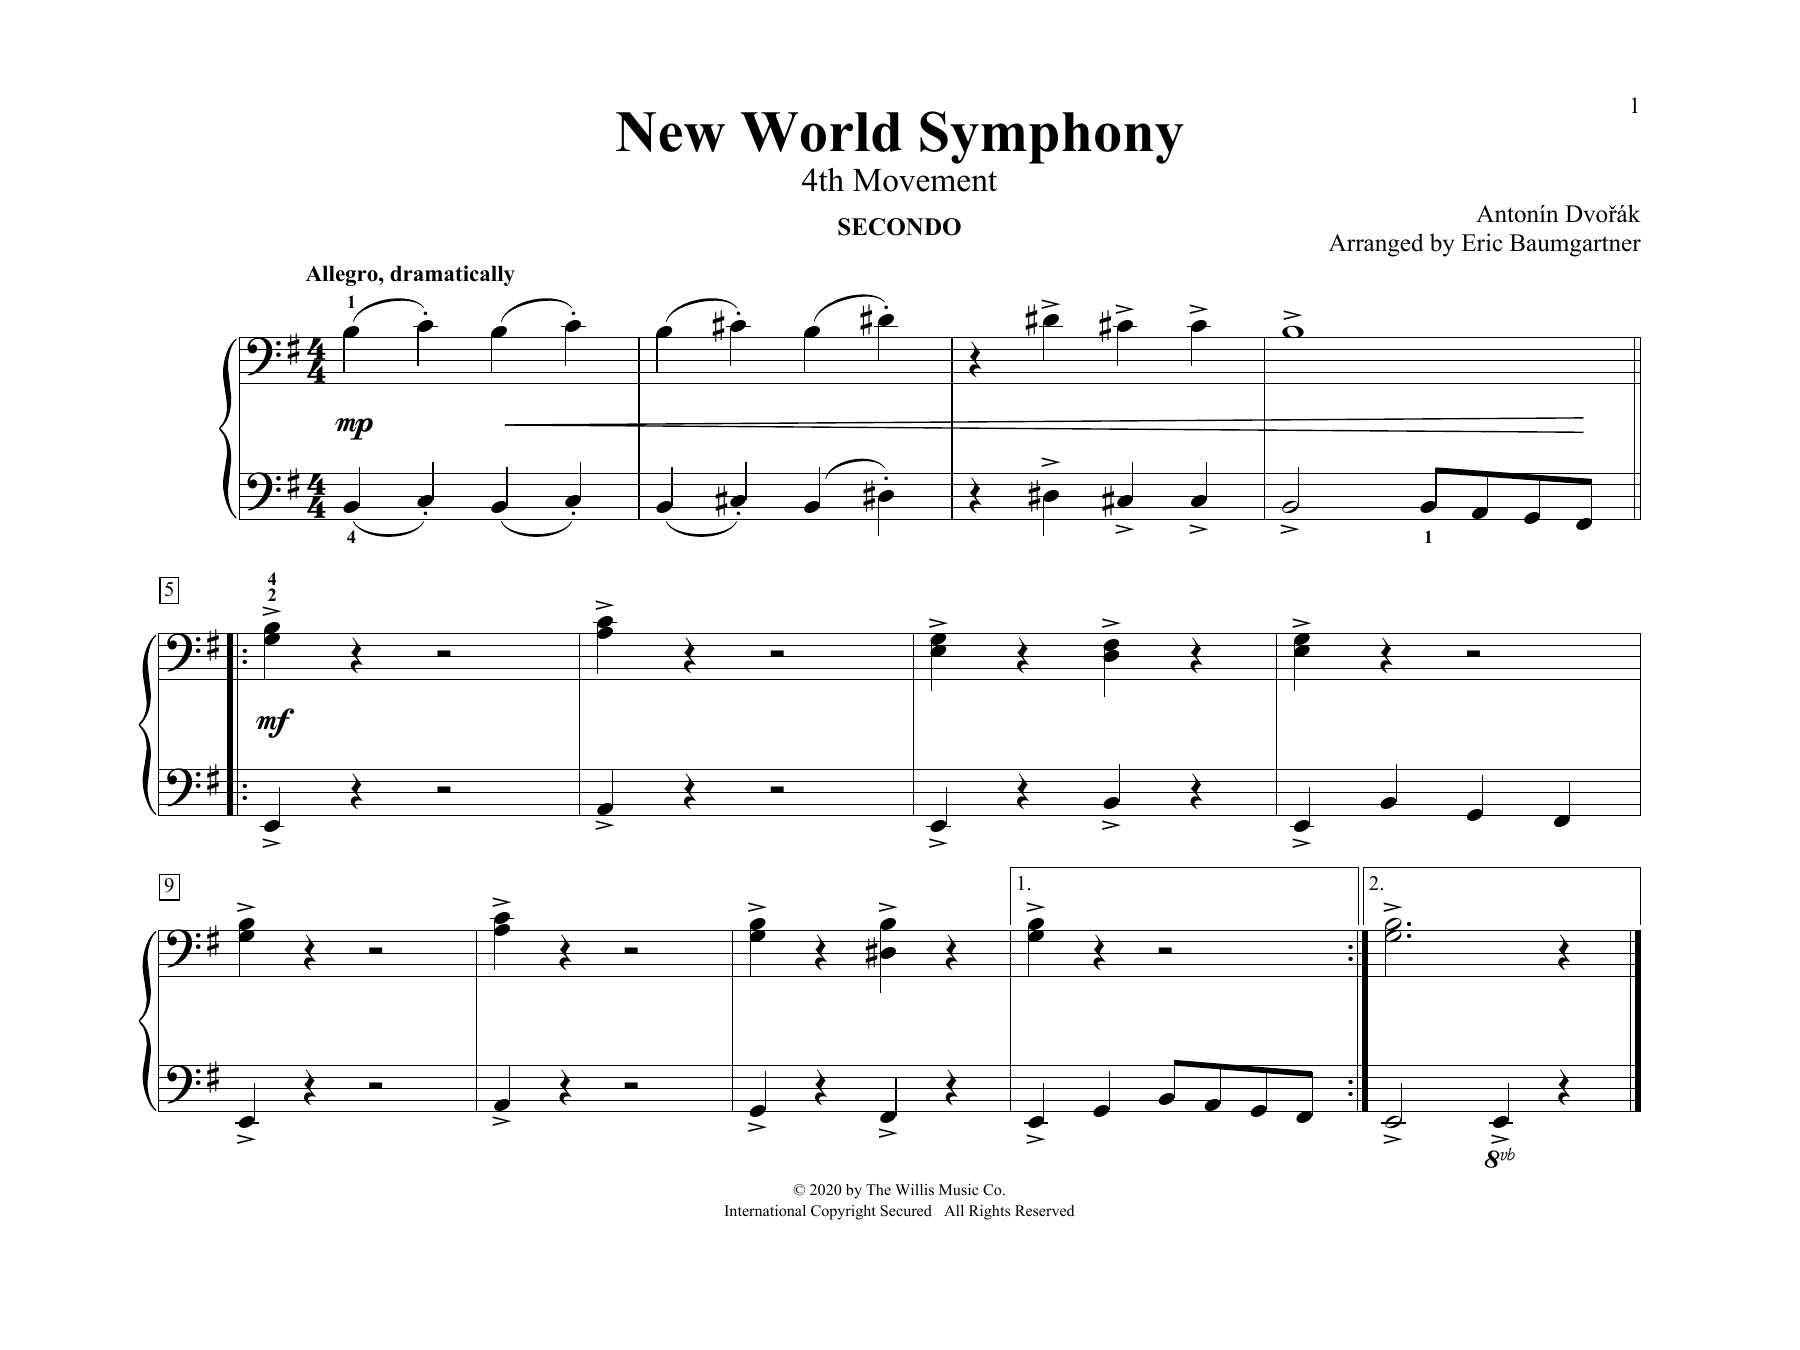 Antonín Dvoøák New World Symphony (4th Movement) (arr. Eric Baumgartner) Sheet Music Notes & Chords for Piano Duet - Download or Print PDF